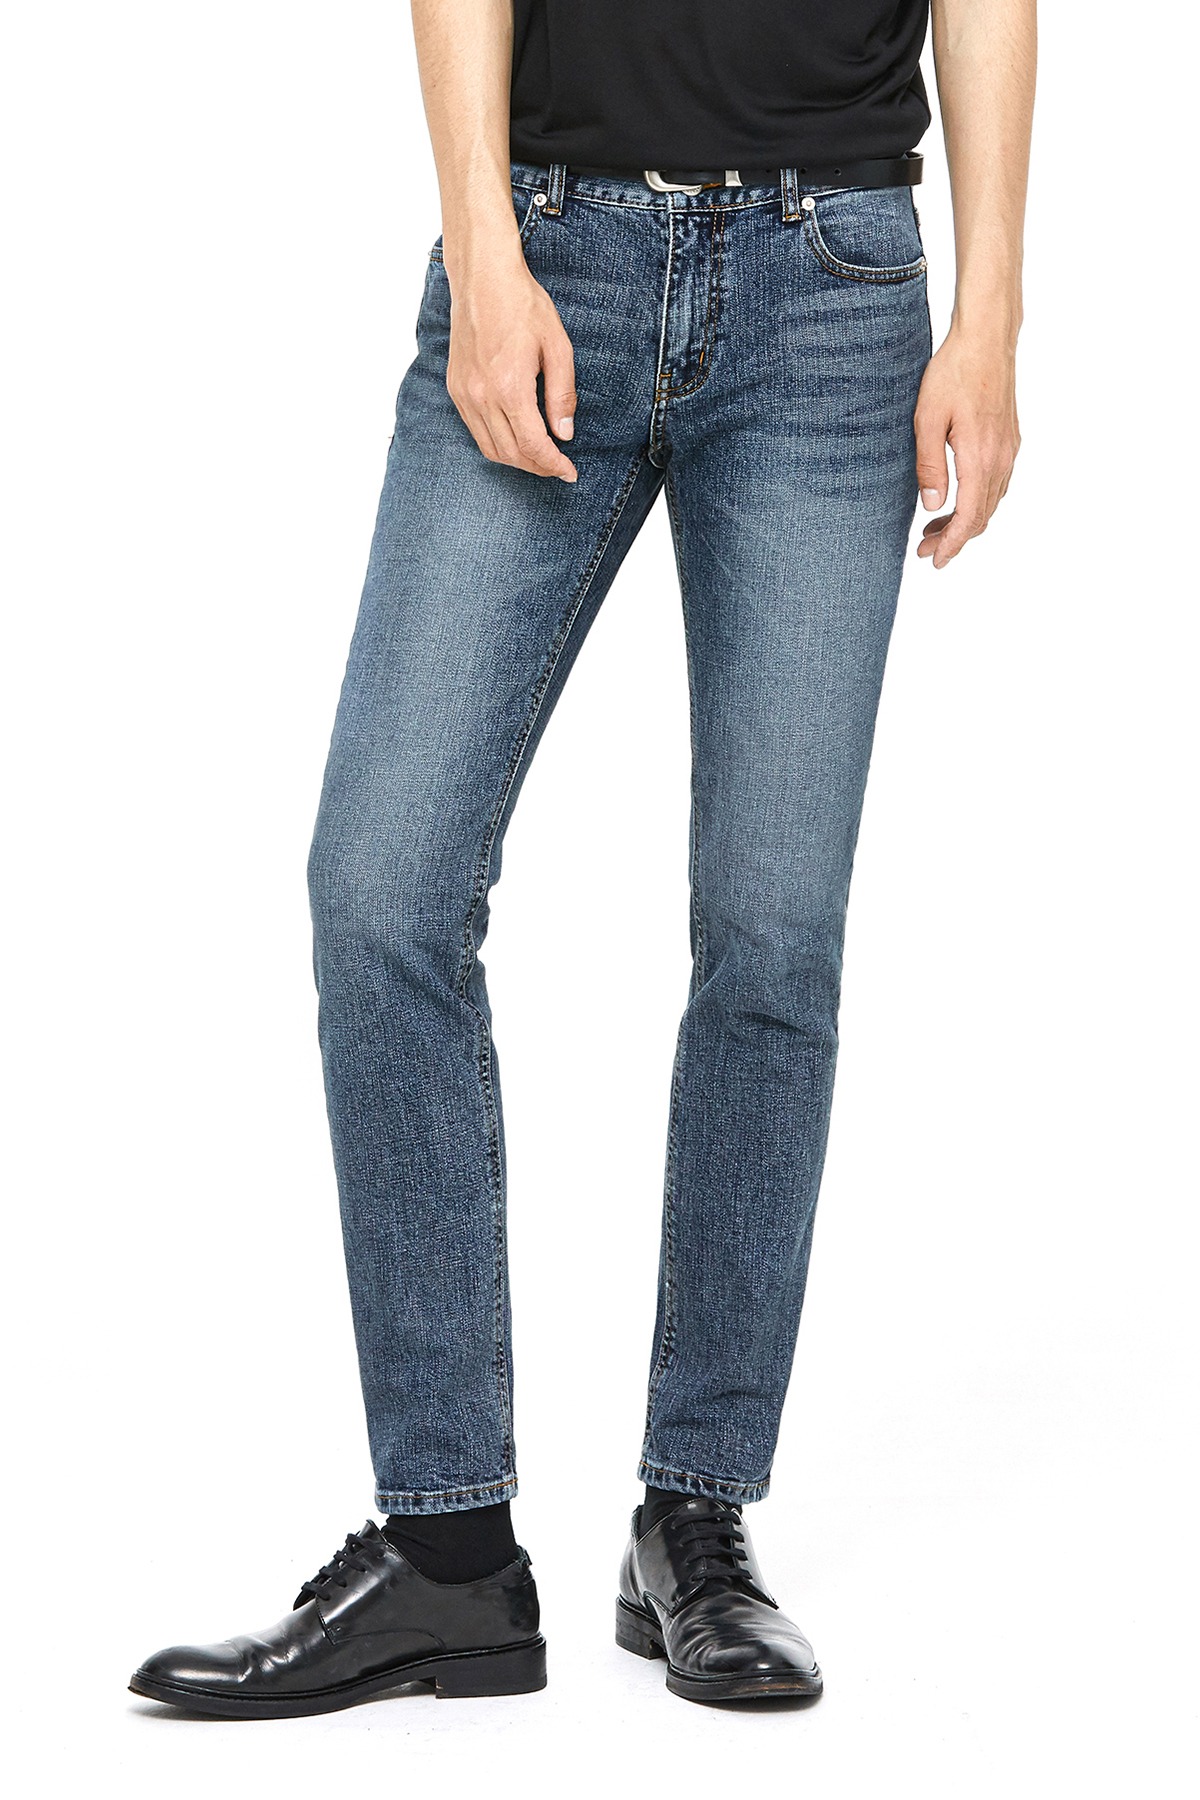 #0085 greysh blue crop jeans